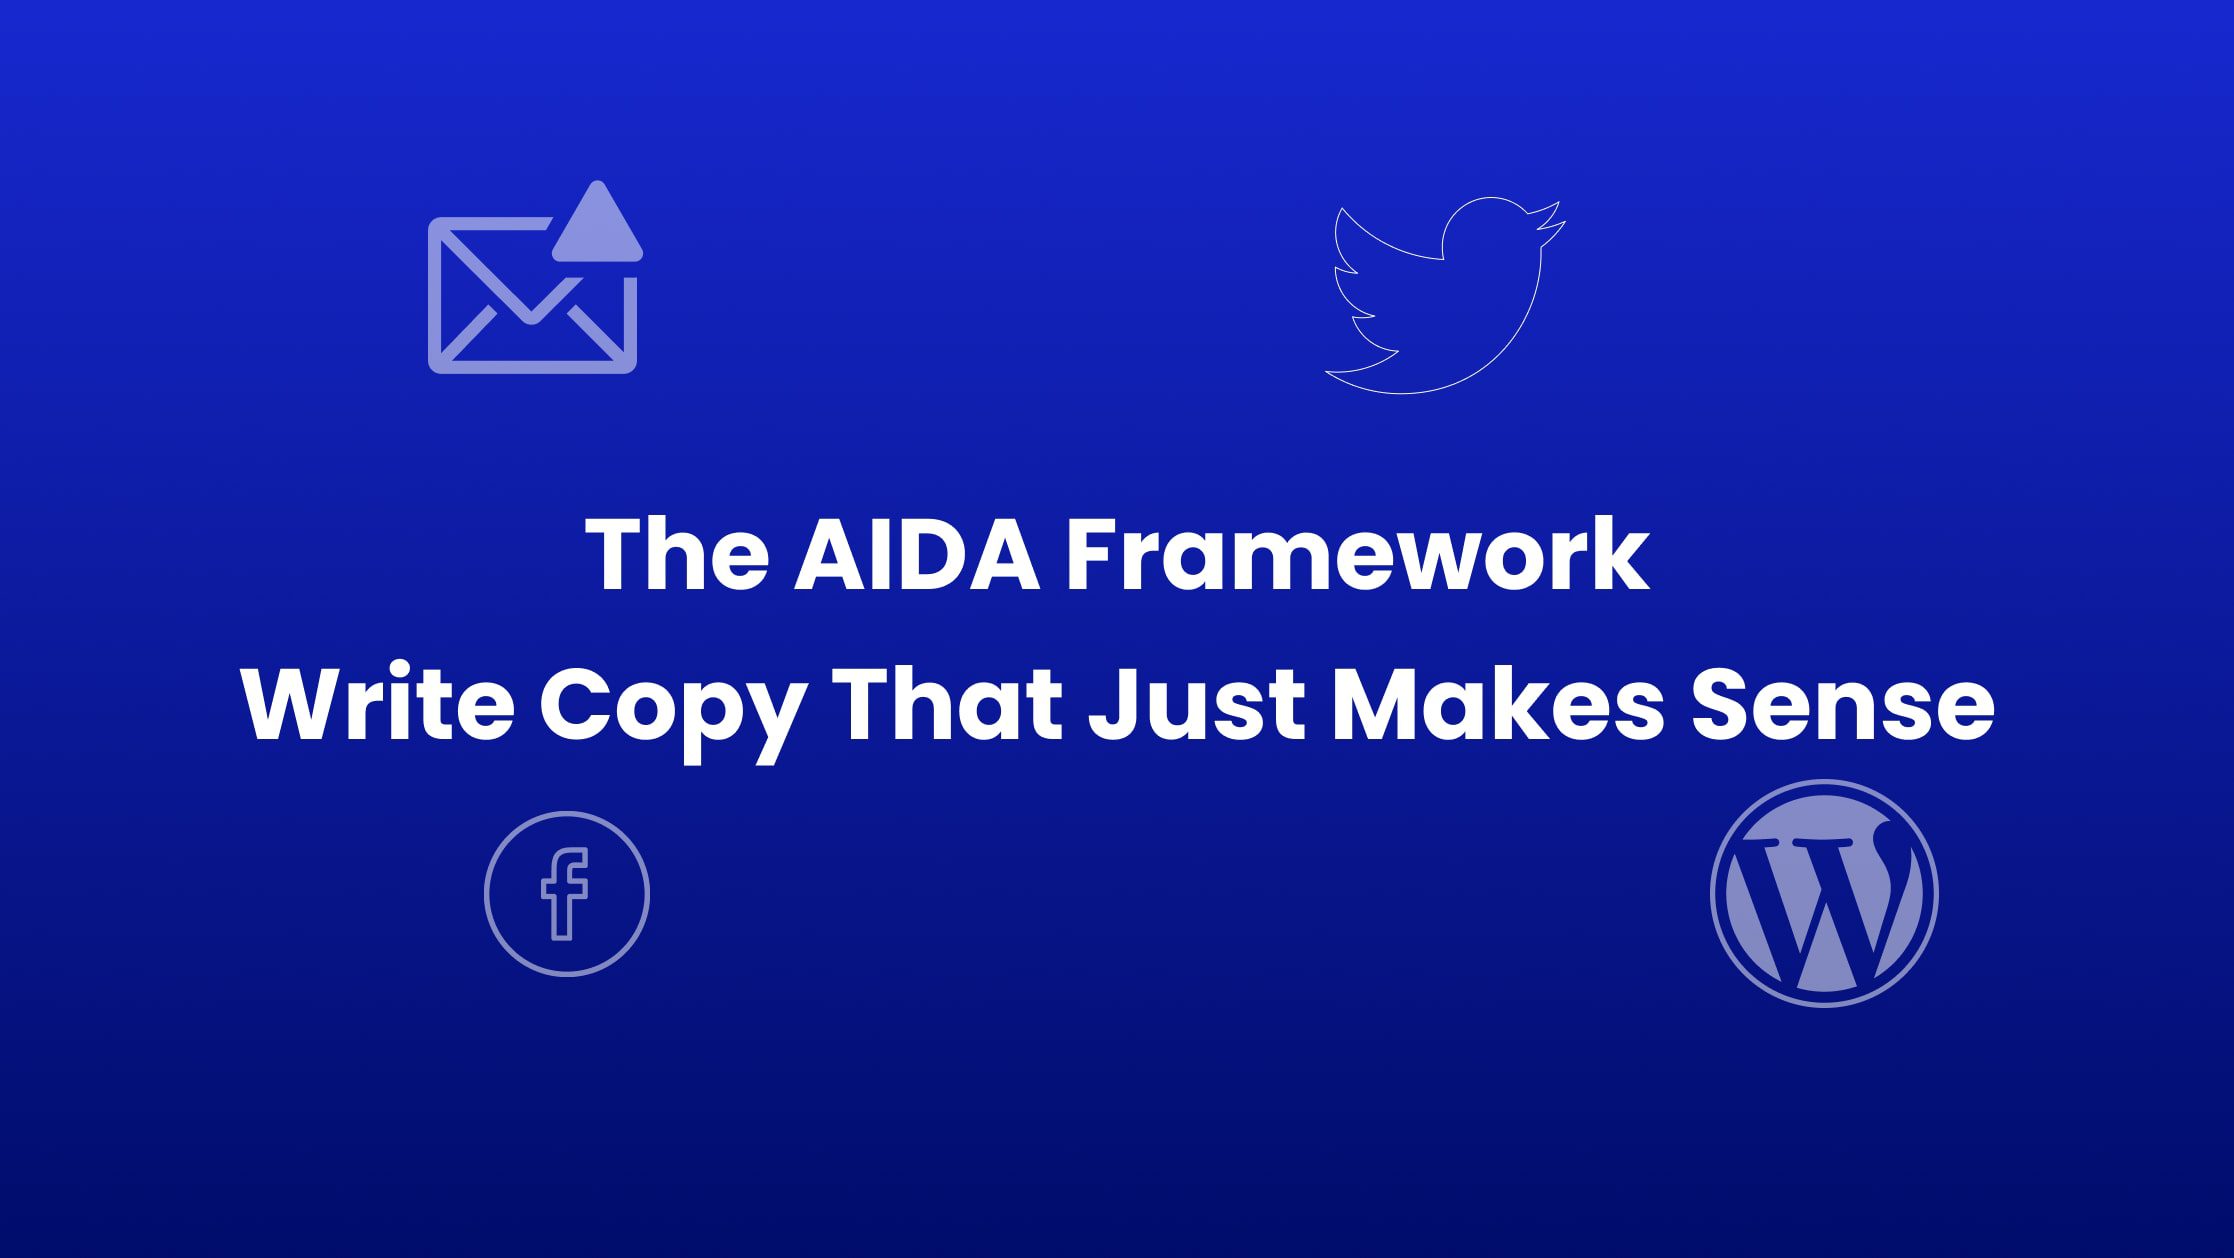 The AIDA Framework: Write Copy That Just Makes Sense